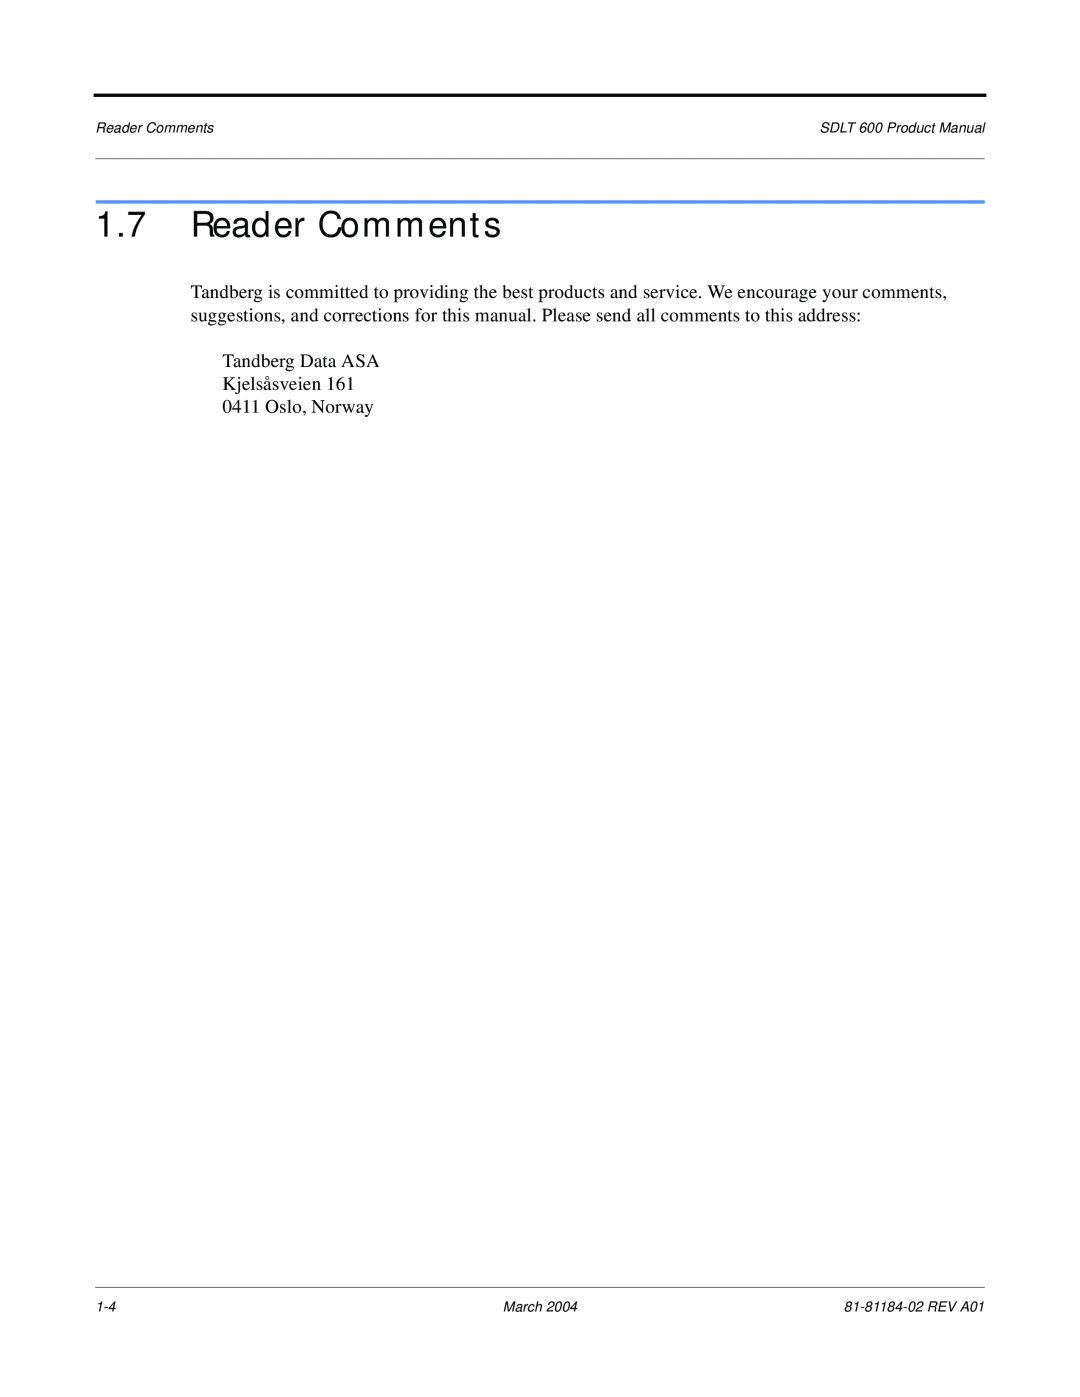 Tandberg Data manual Reader Comments, March, SDLT 600 Product Manual, REV A01 